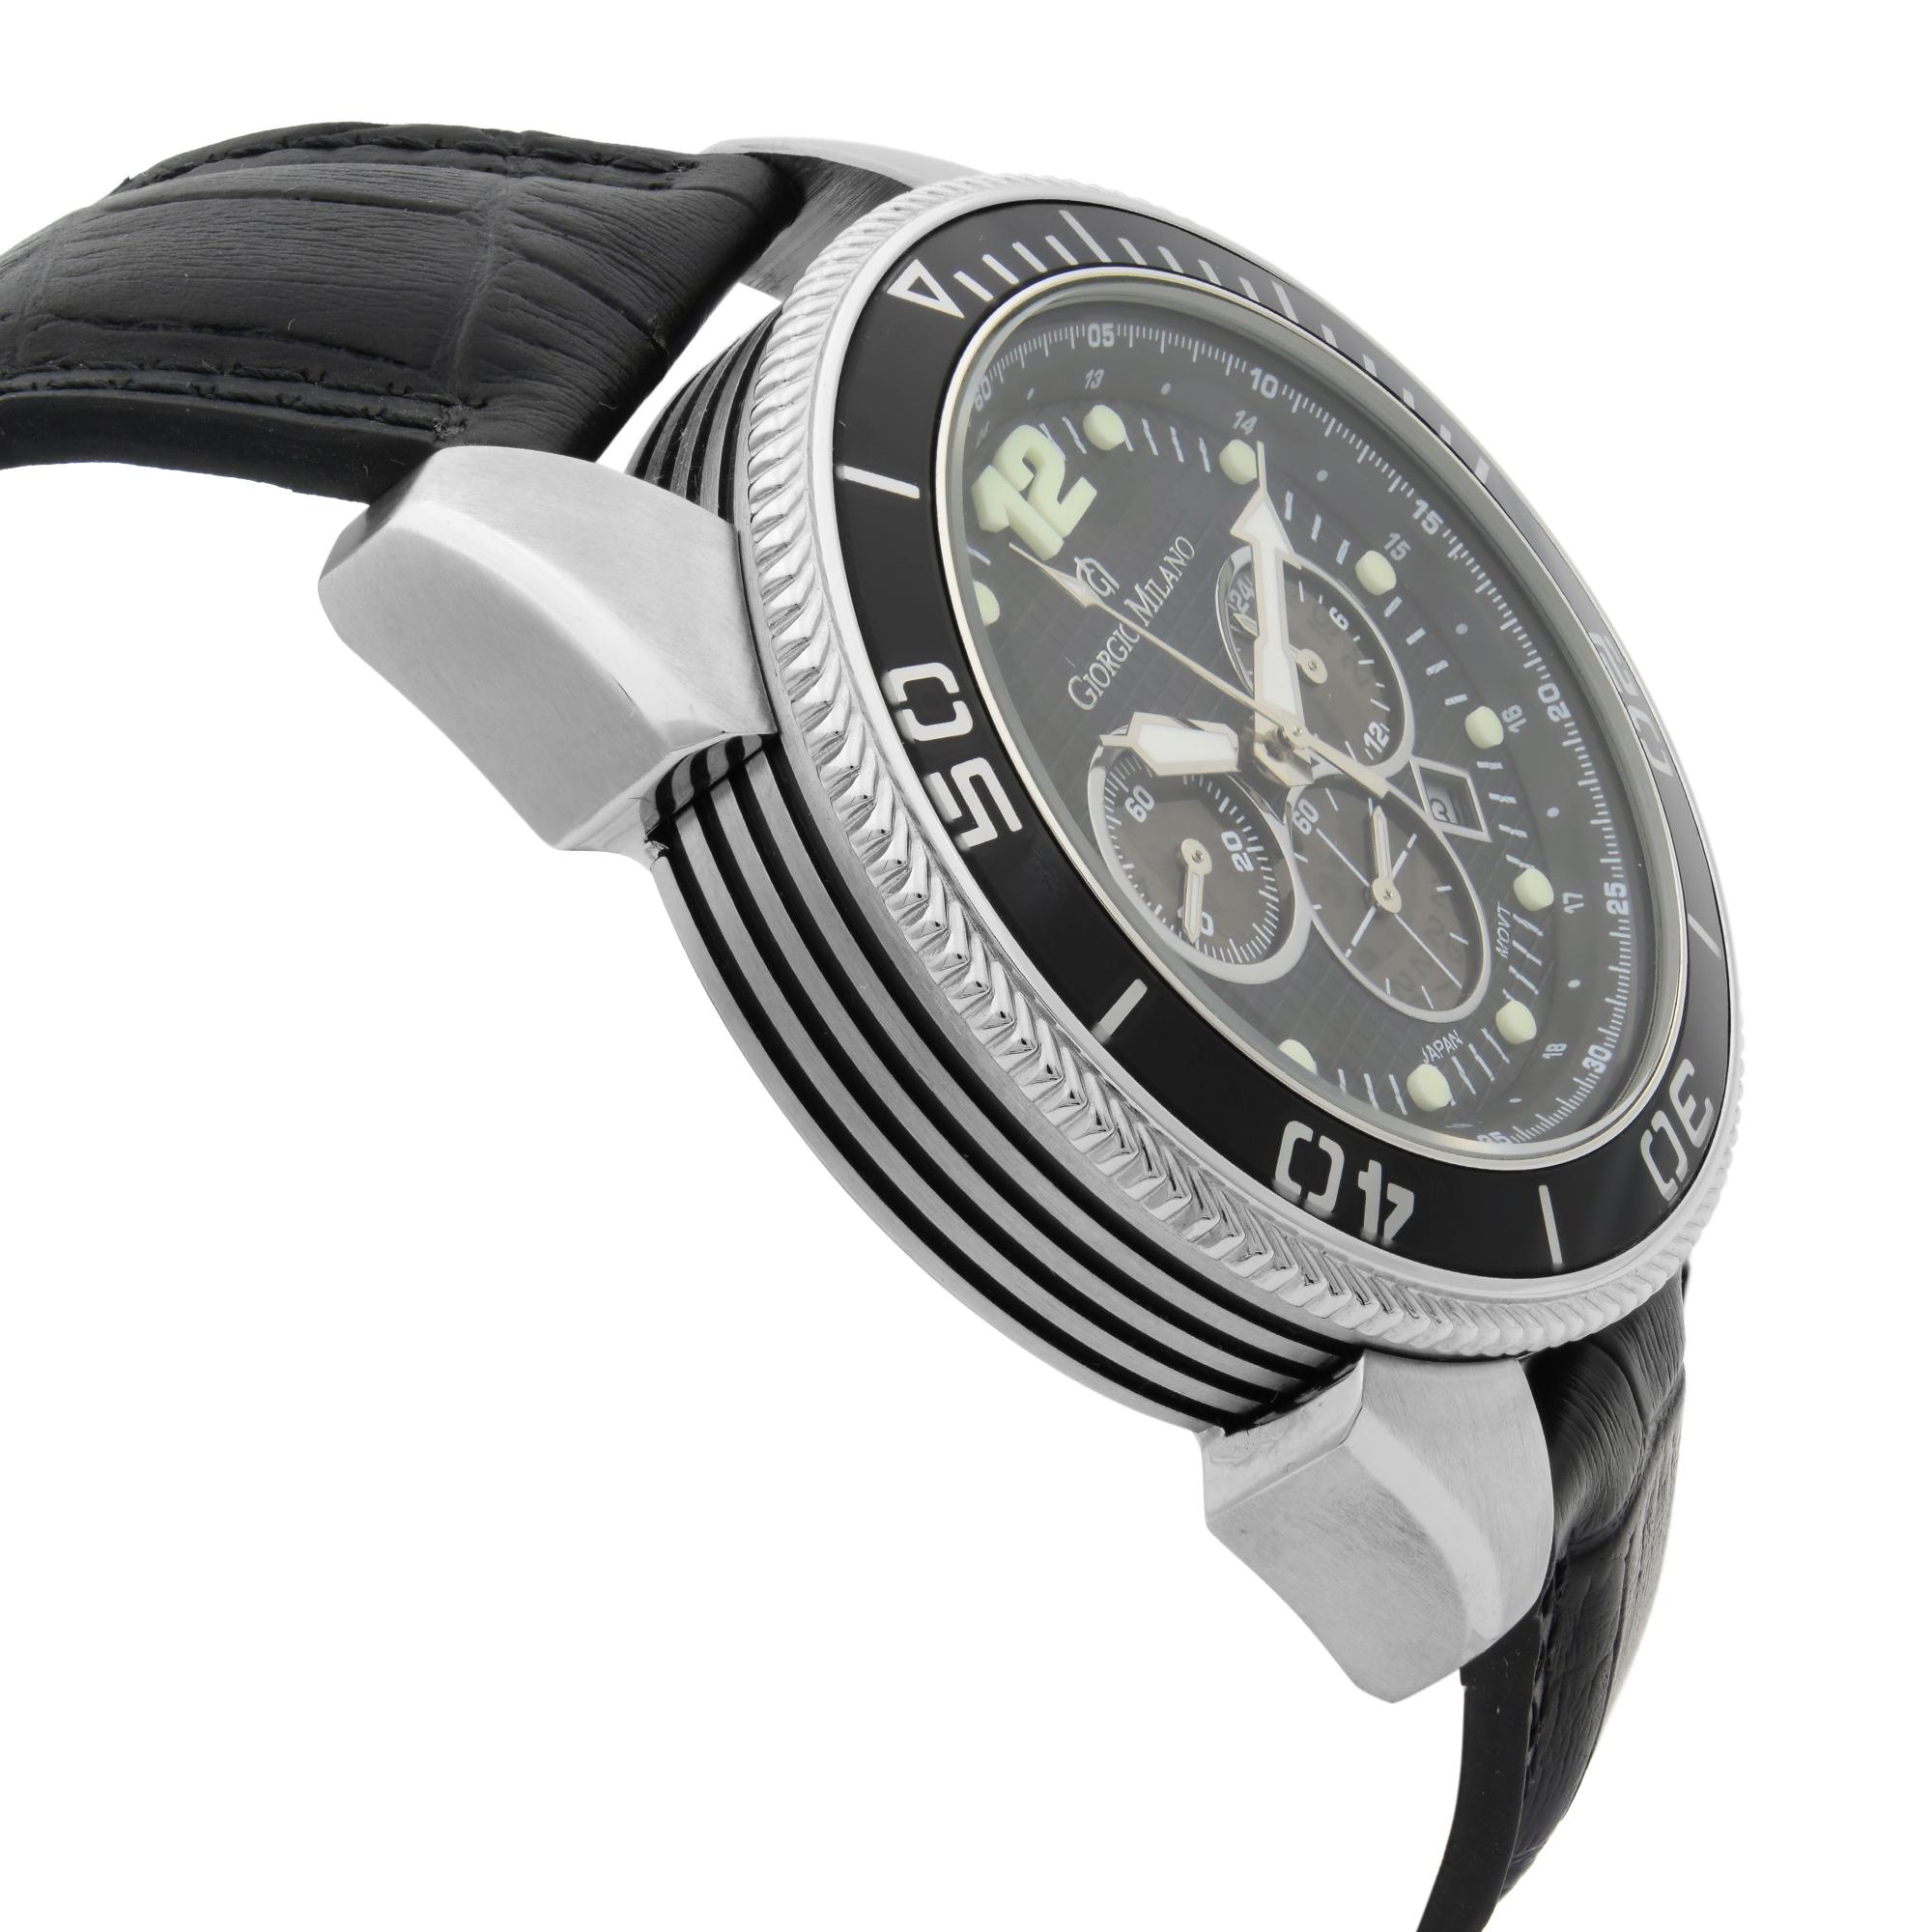 Giorgio Milano Stainless Steel Chronograph Quartz Men's Watch 871ST032 1